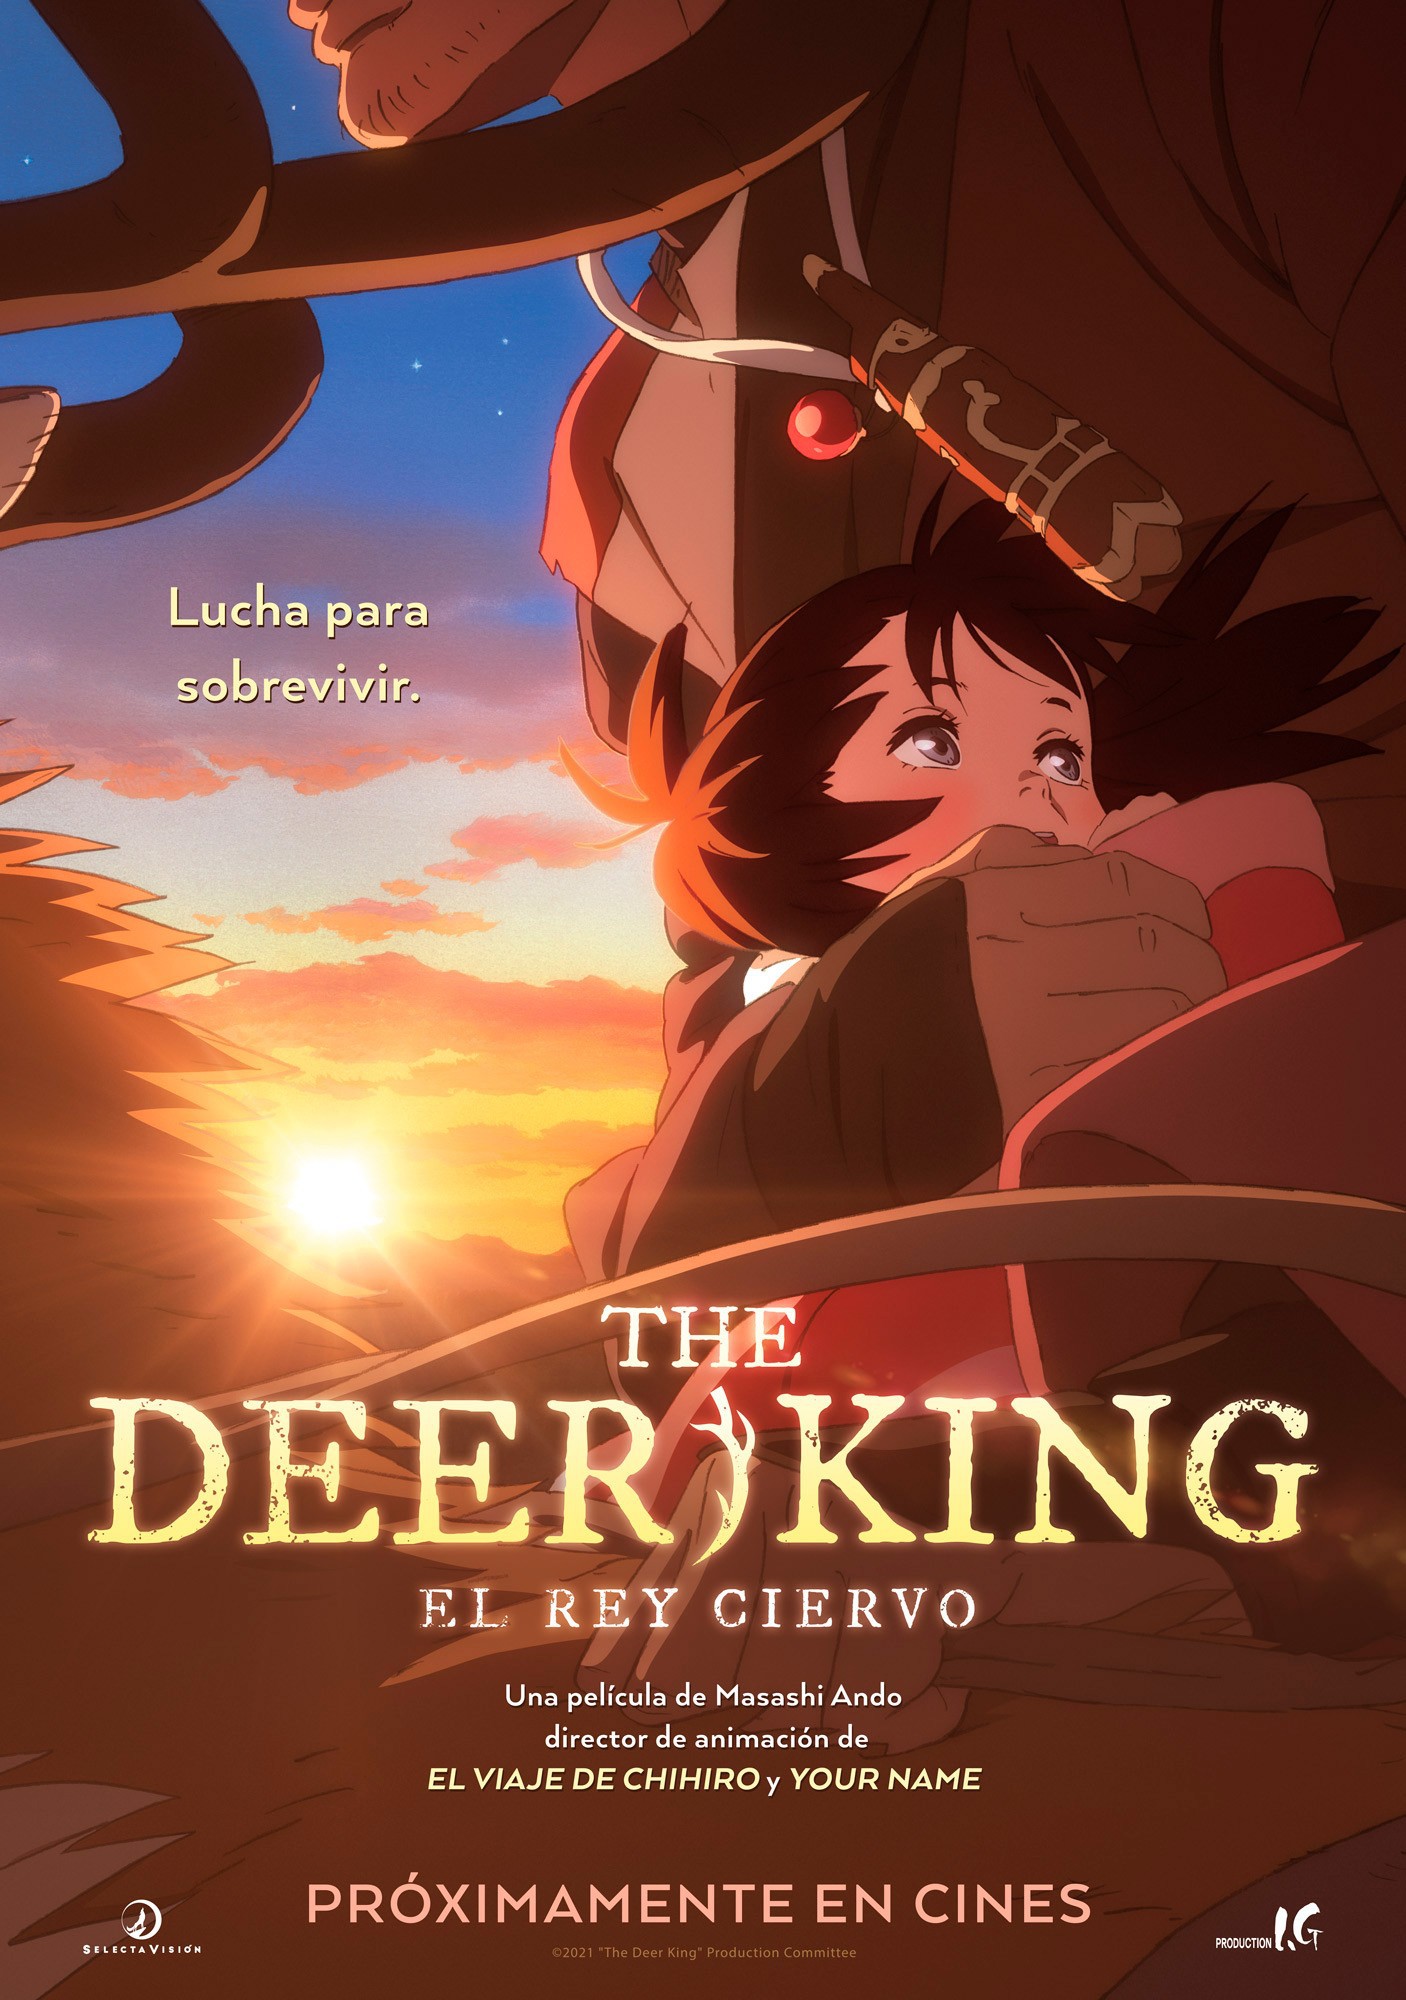 Cartel de The Deer King (El rey ciervo)